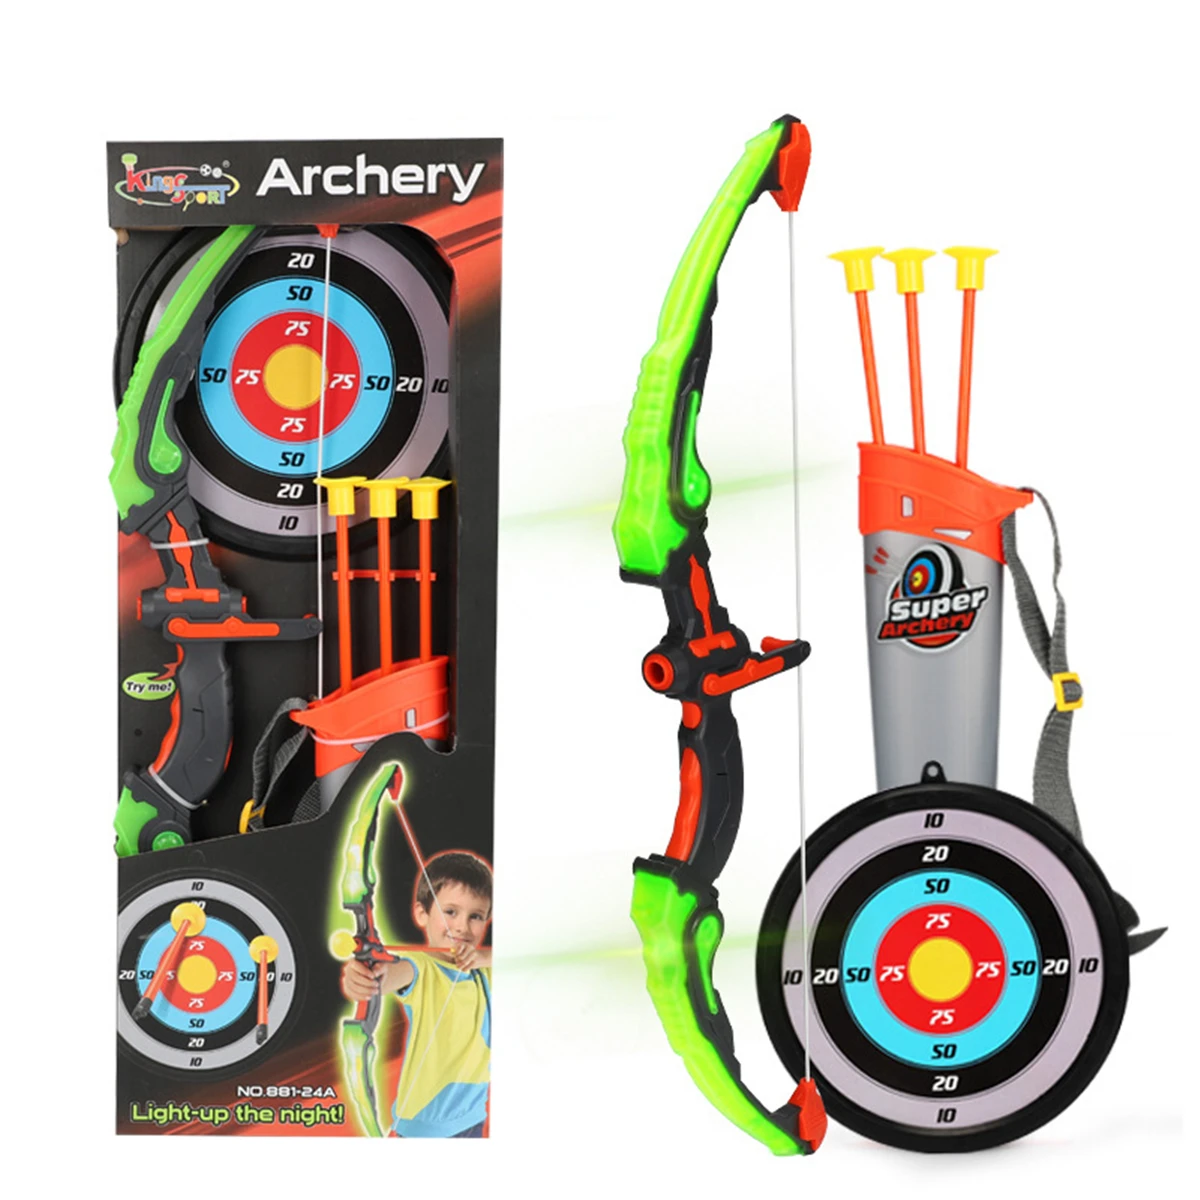 Girls Bow Arrow Target Quiver Toy Set w/ LED Lights Kids Children Indoor Outdoor 